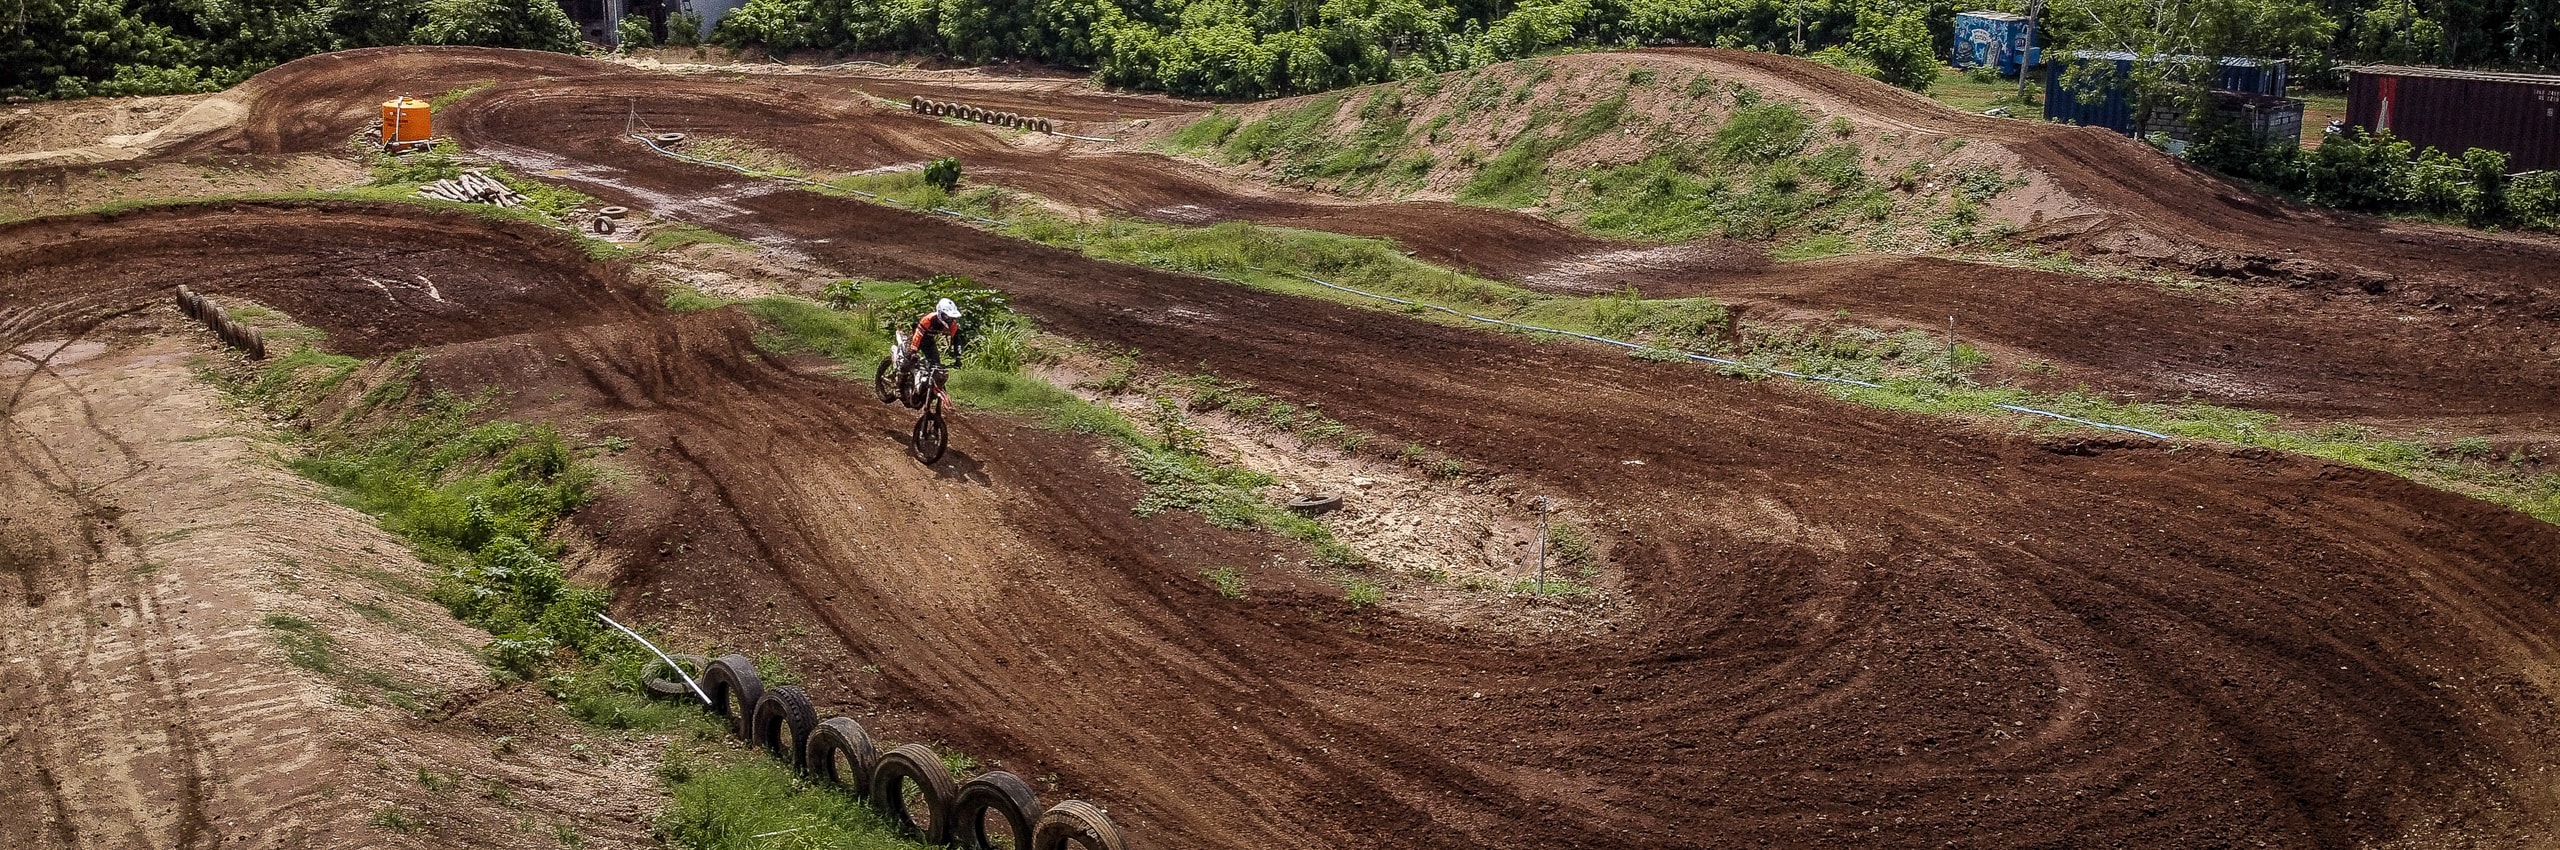 Walging Jong Turbine Motocross action in Bali Dirt Bike Park